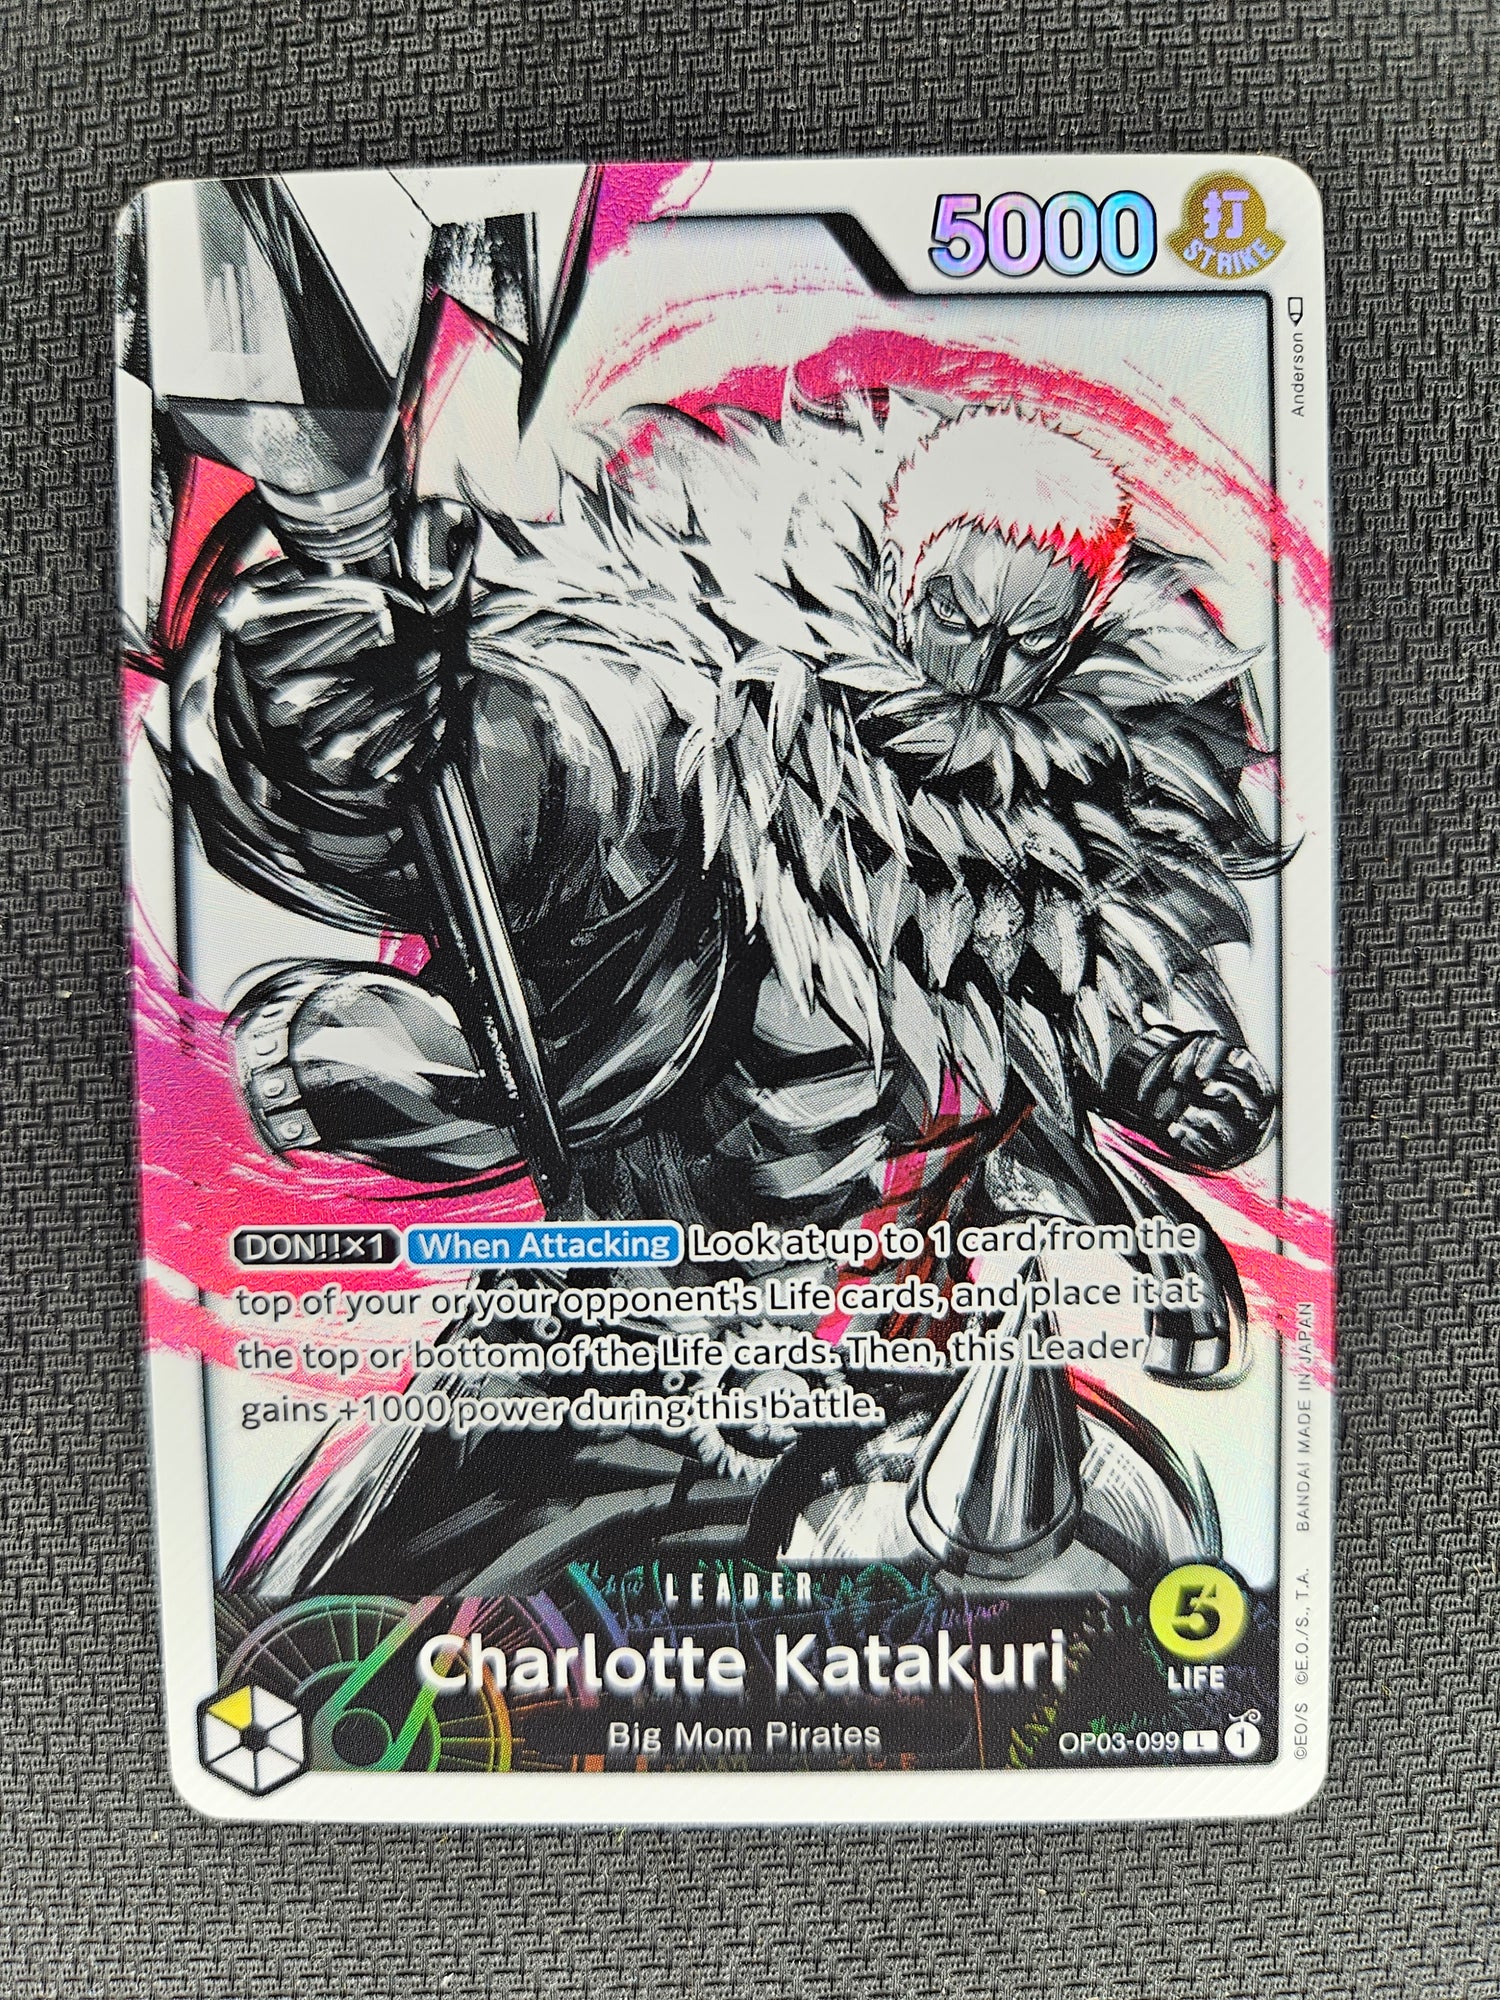 ONE PIECE CARD GAME OP03-099 L Charlotte Katakuri